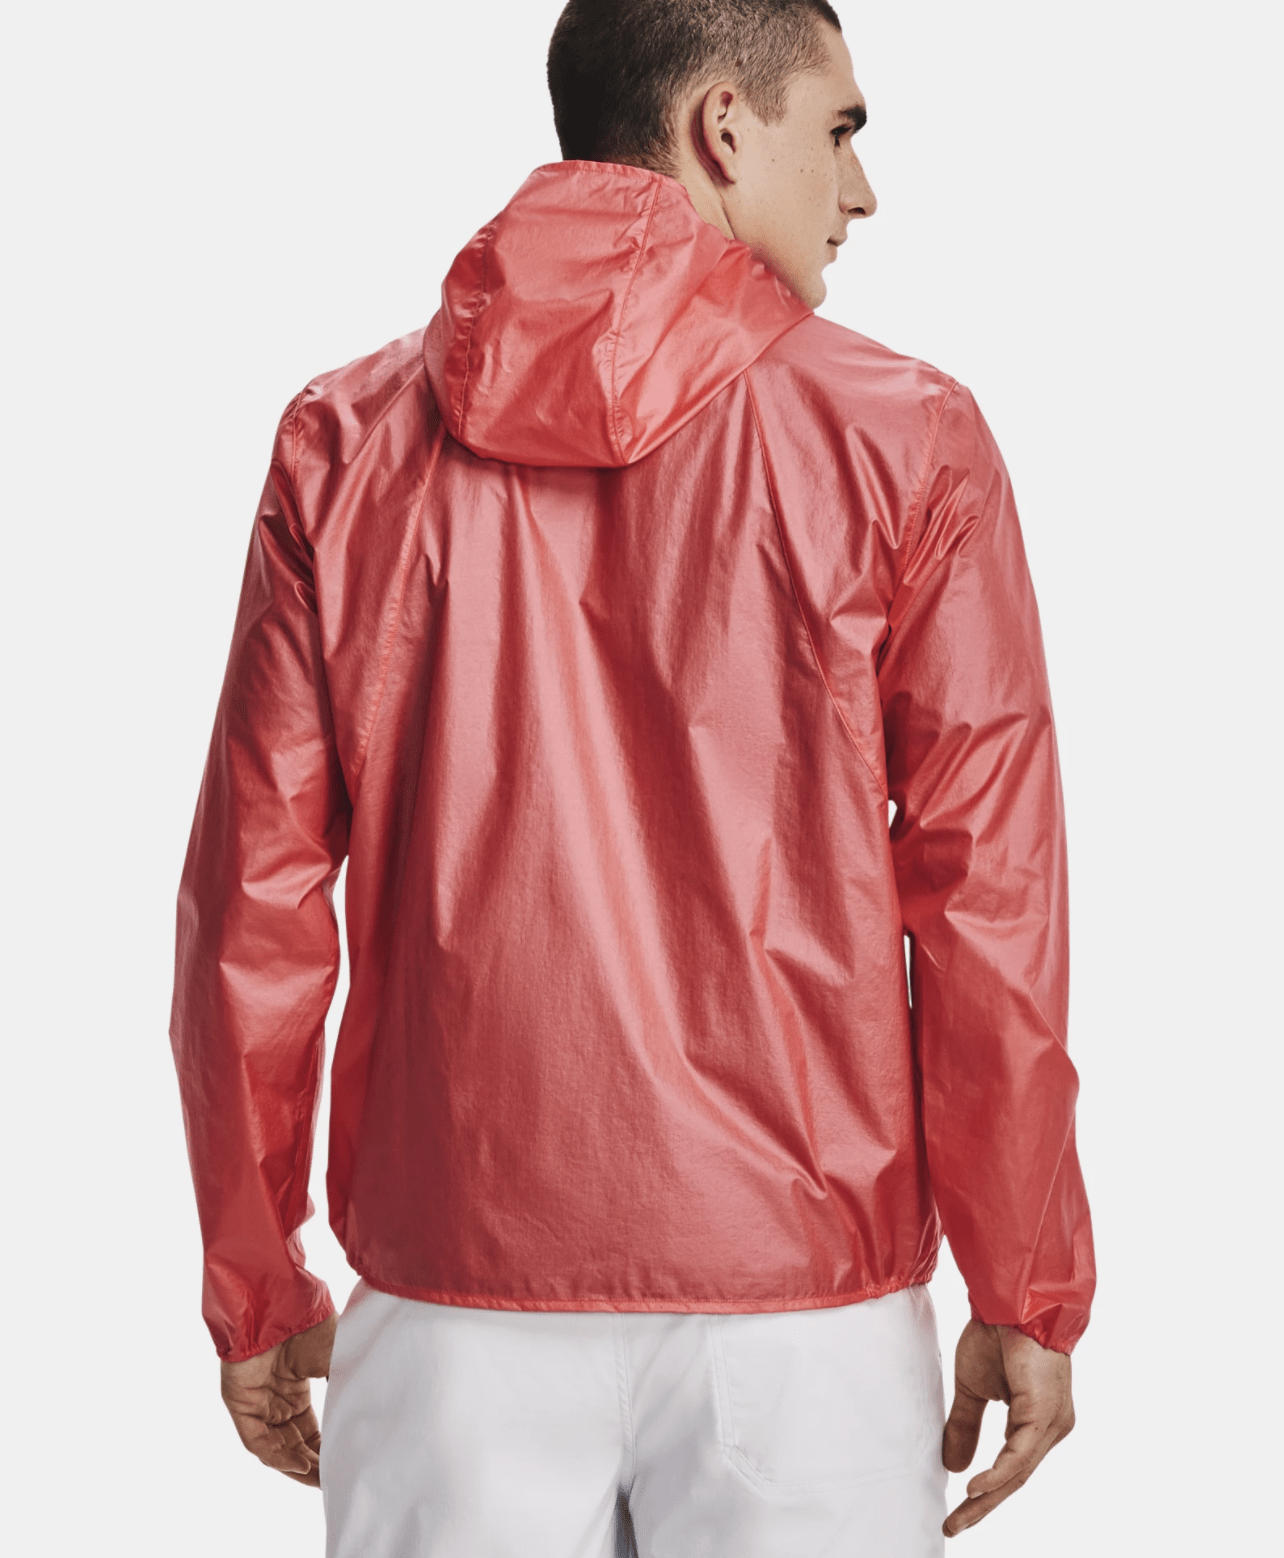 Everlane's new rain coat is an eco-friendly rainy day option